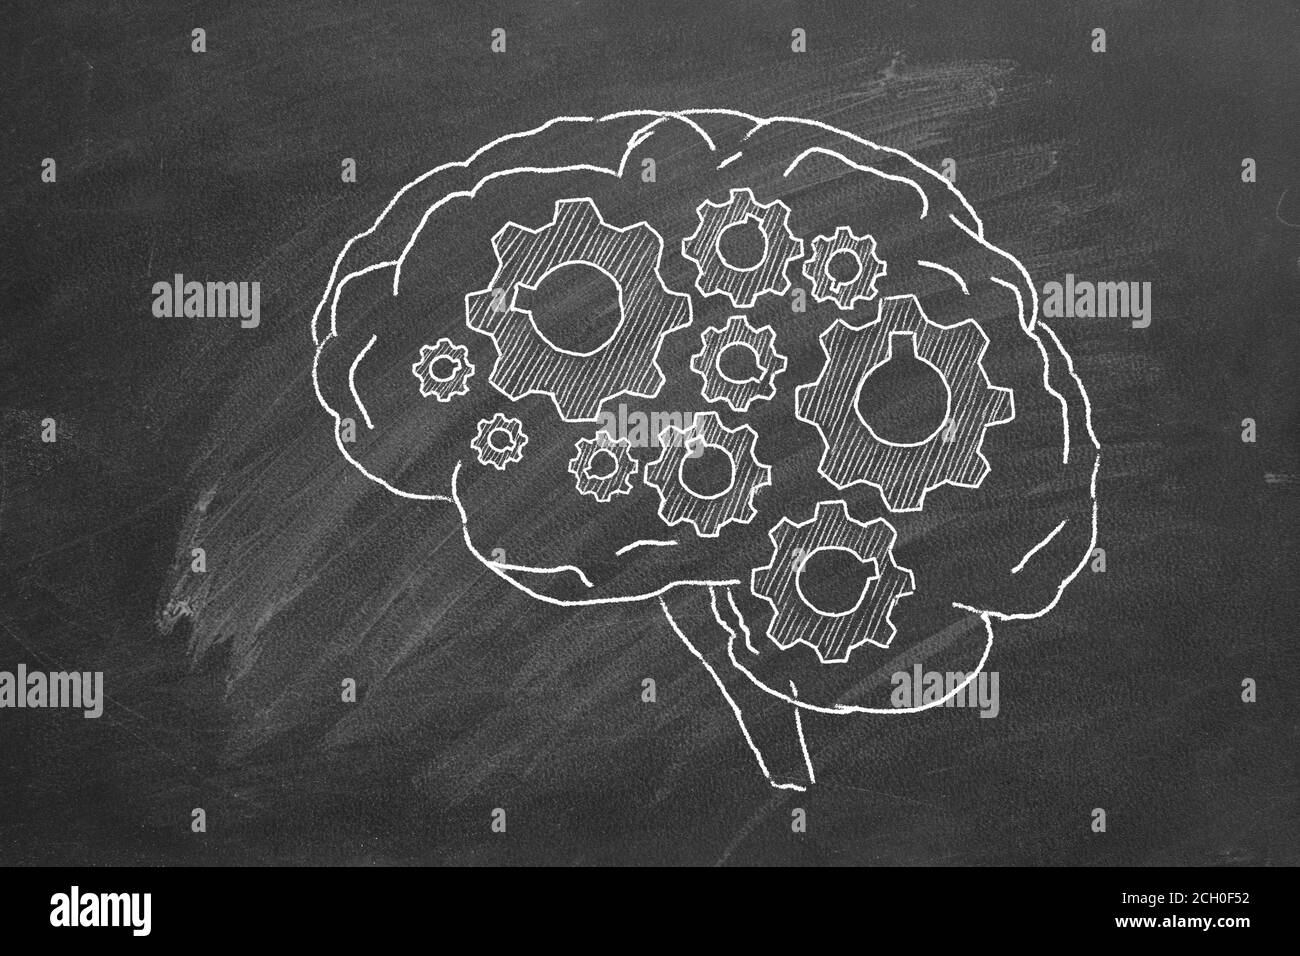 Human brain with cogwheels hand drawn in chalk on a blackboard. Stock Photo